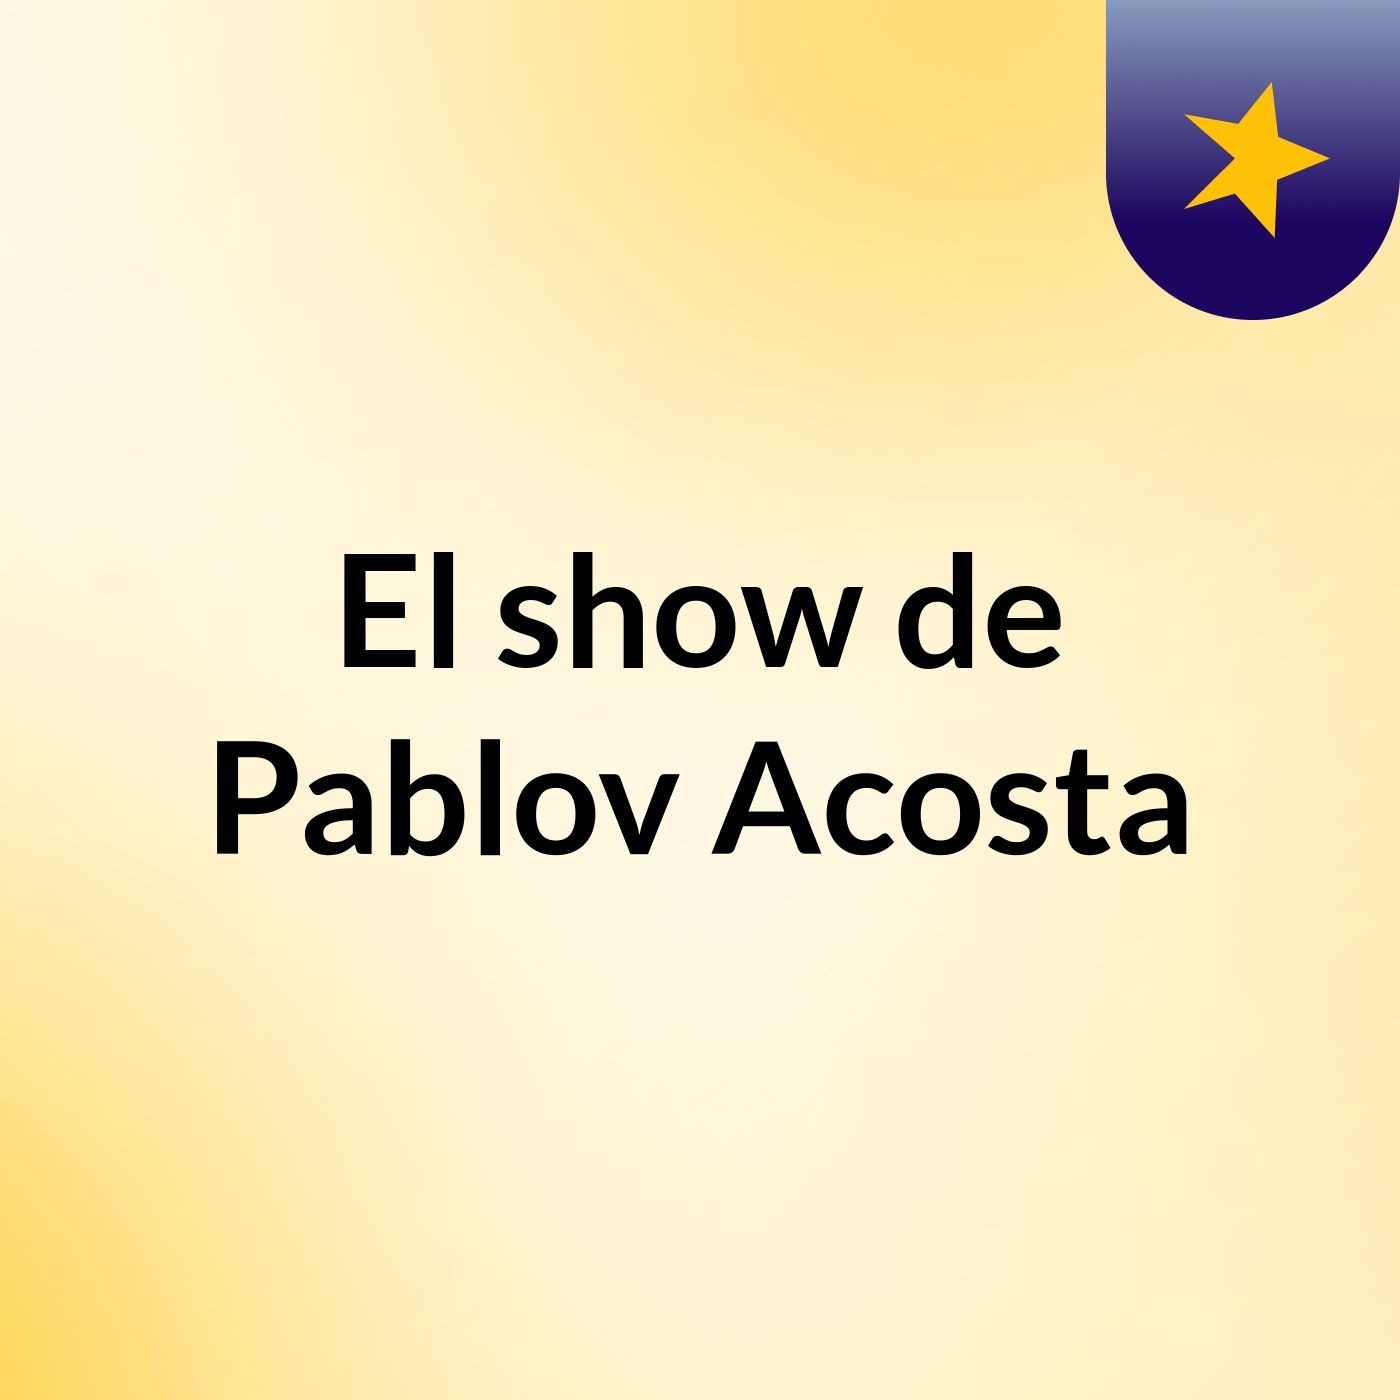 El show de Pablov Acosta